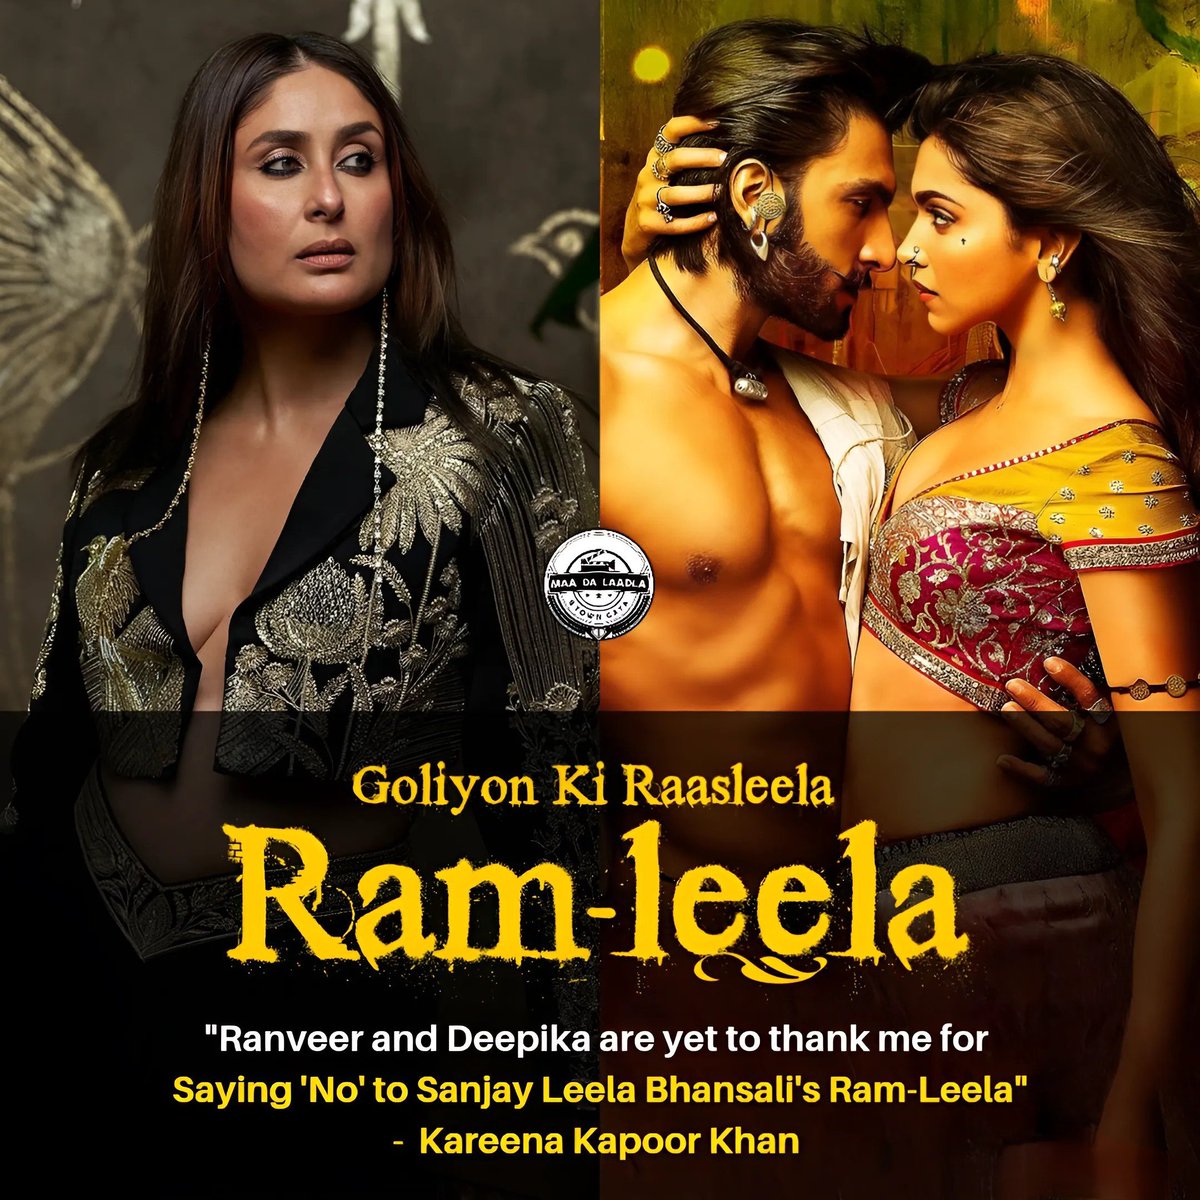 '#Ranveer and #Deepika are yet to thank me for saying 'No' to #SanjayLeelaBhansali's Ram-Leela' says #KareenaKapoorKhan 🪇🥁📯

#RanveerSingh #DeepikaPadukone #KareenaKapoor #suryacinefinite #GoliyonKiRaasleelaRamleela #RamLeela